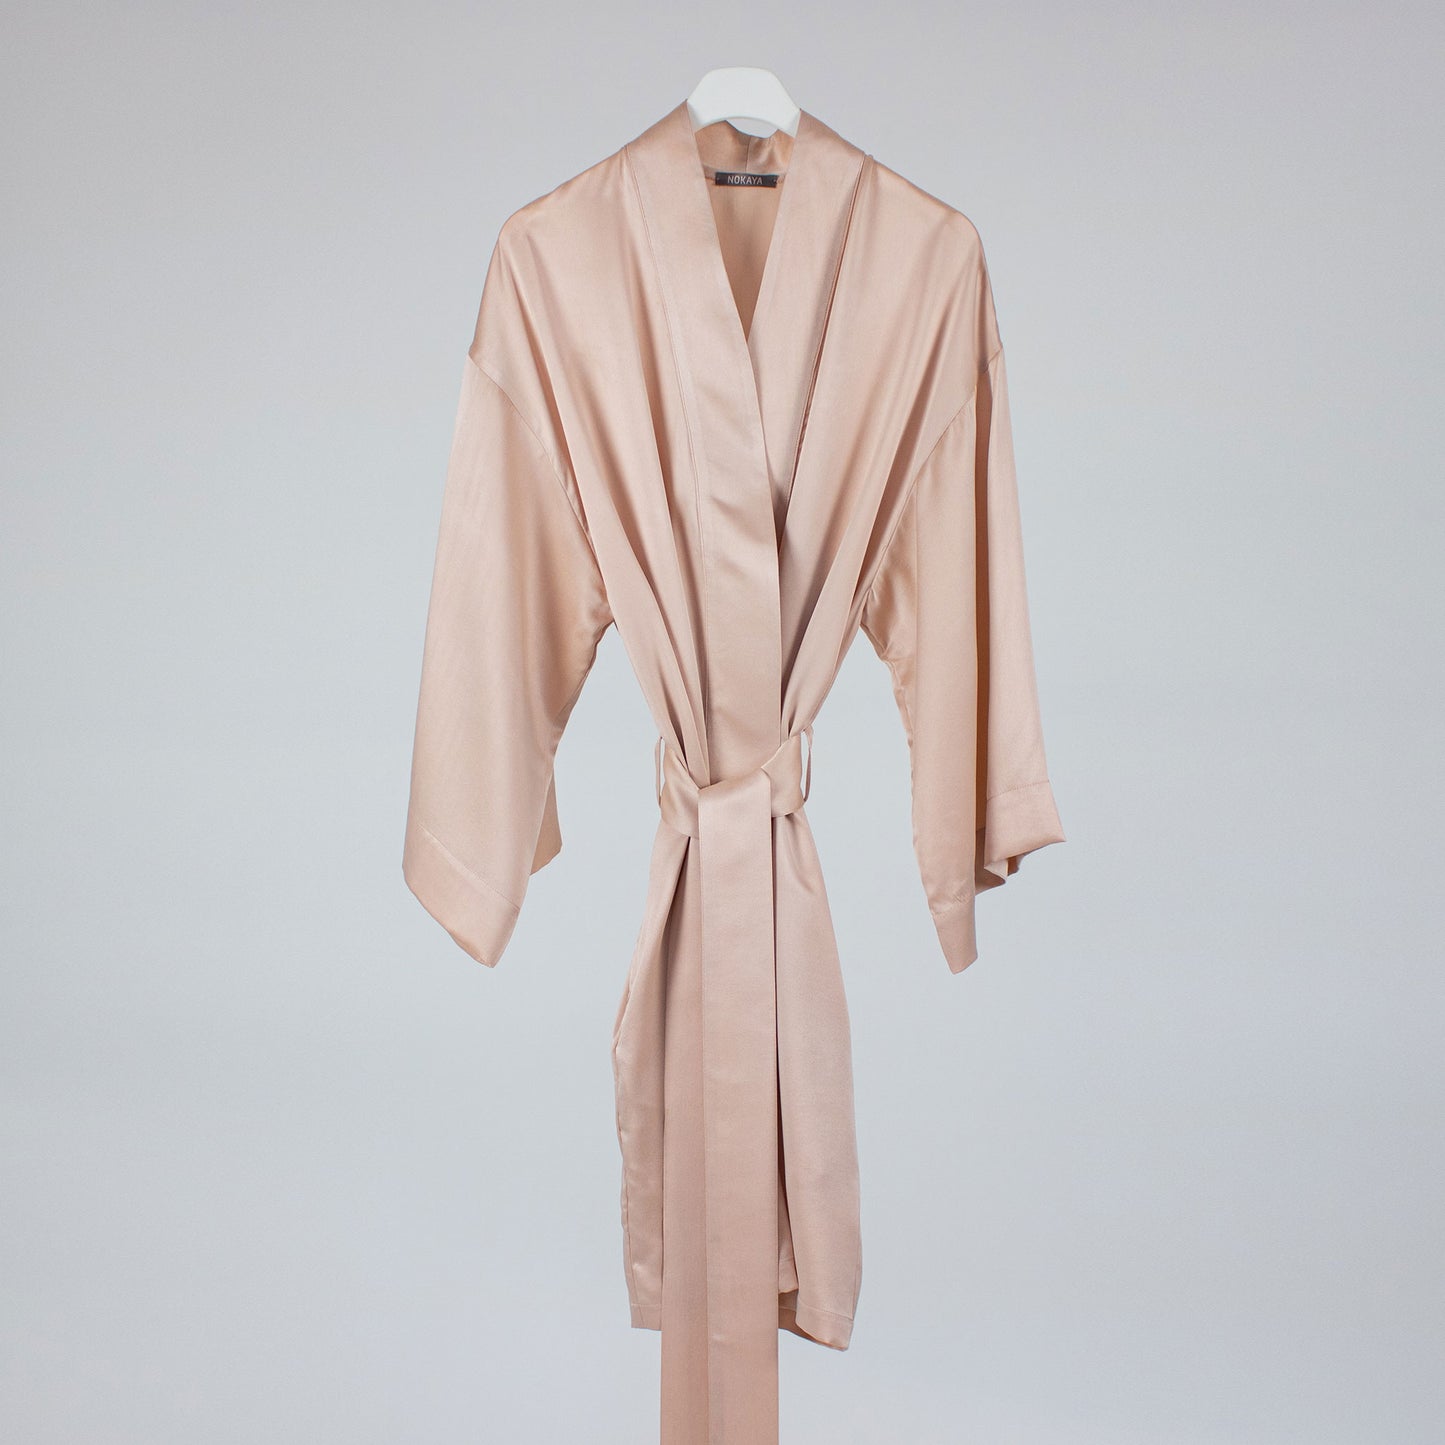 Pink silk robe on hanger